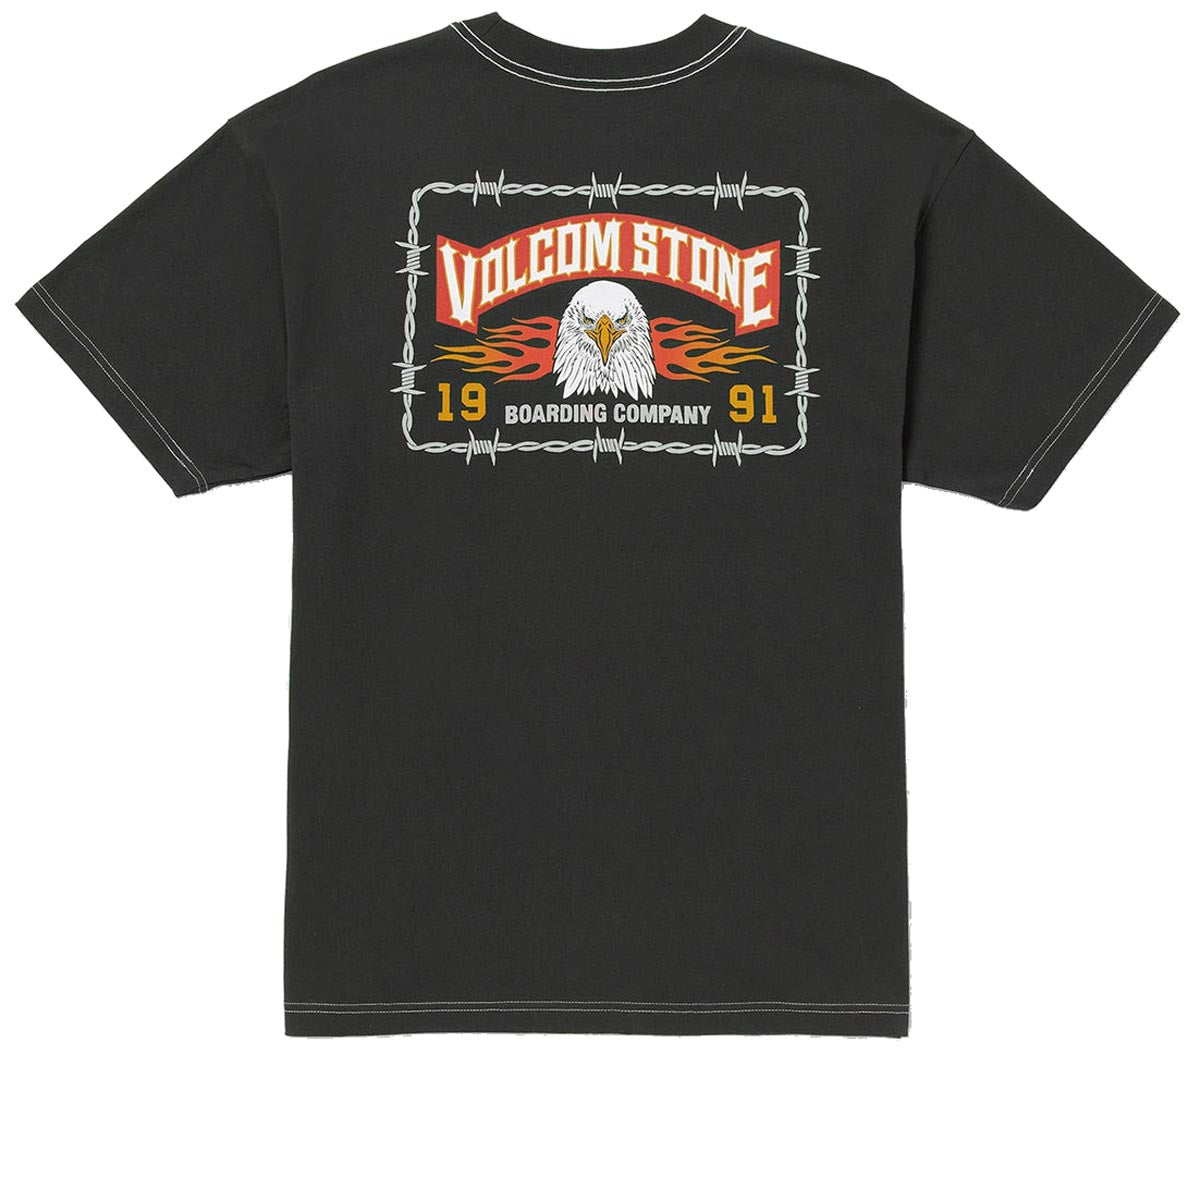 Volcom Barb Stone T-Shirt - Stealth image 1